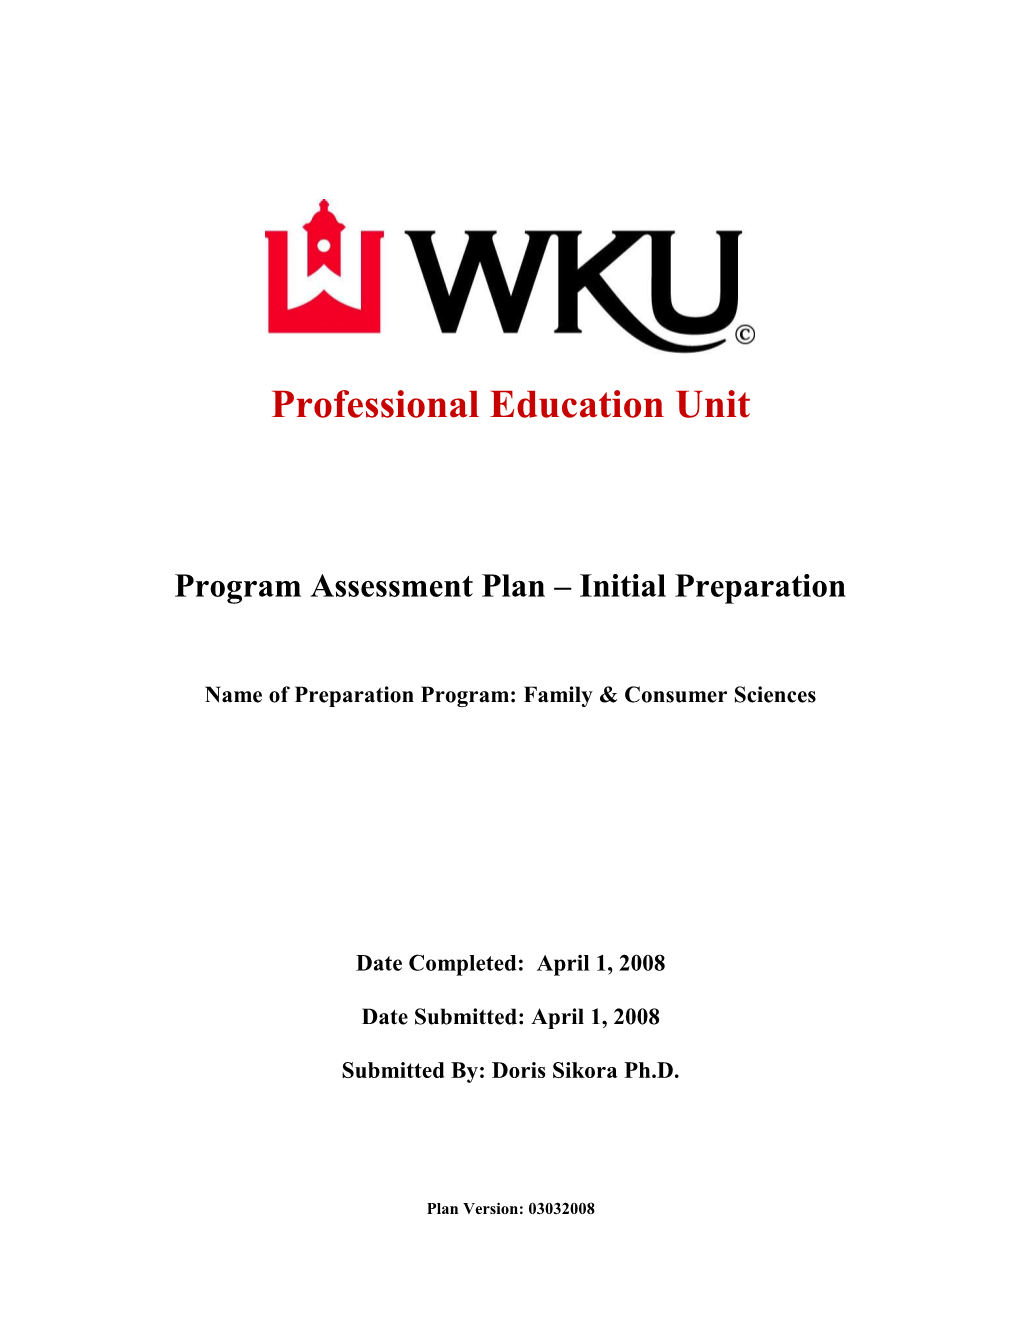 WKU Program Review Document #2